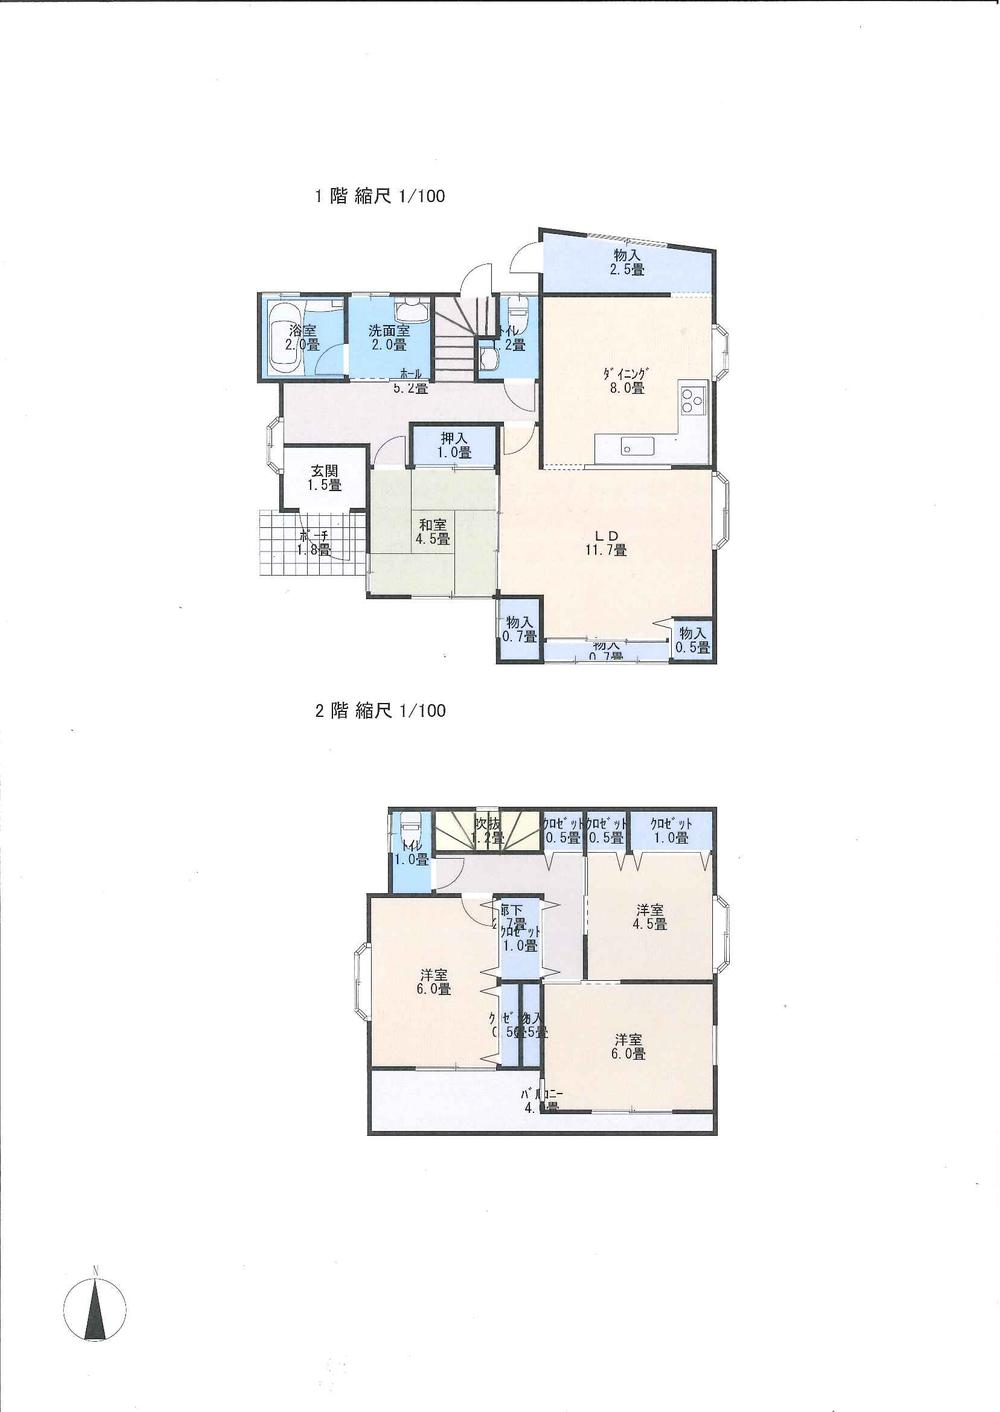 Floor plan. 15.8 million yen, 4LDK + S (storeroom), Land area 134.46 sq m , Building area 107.18 sq m